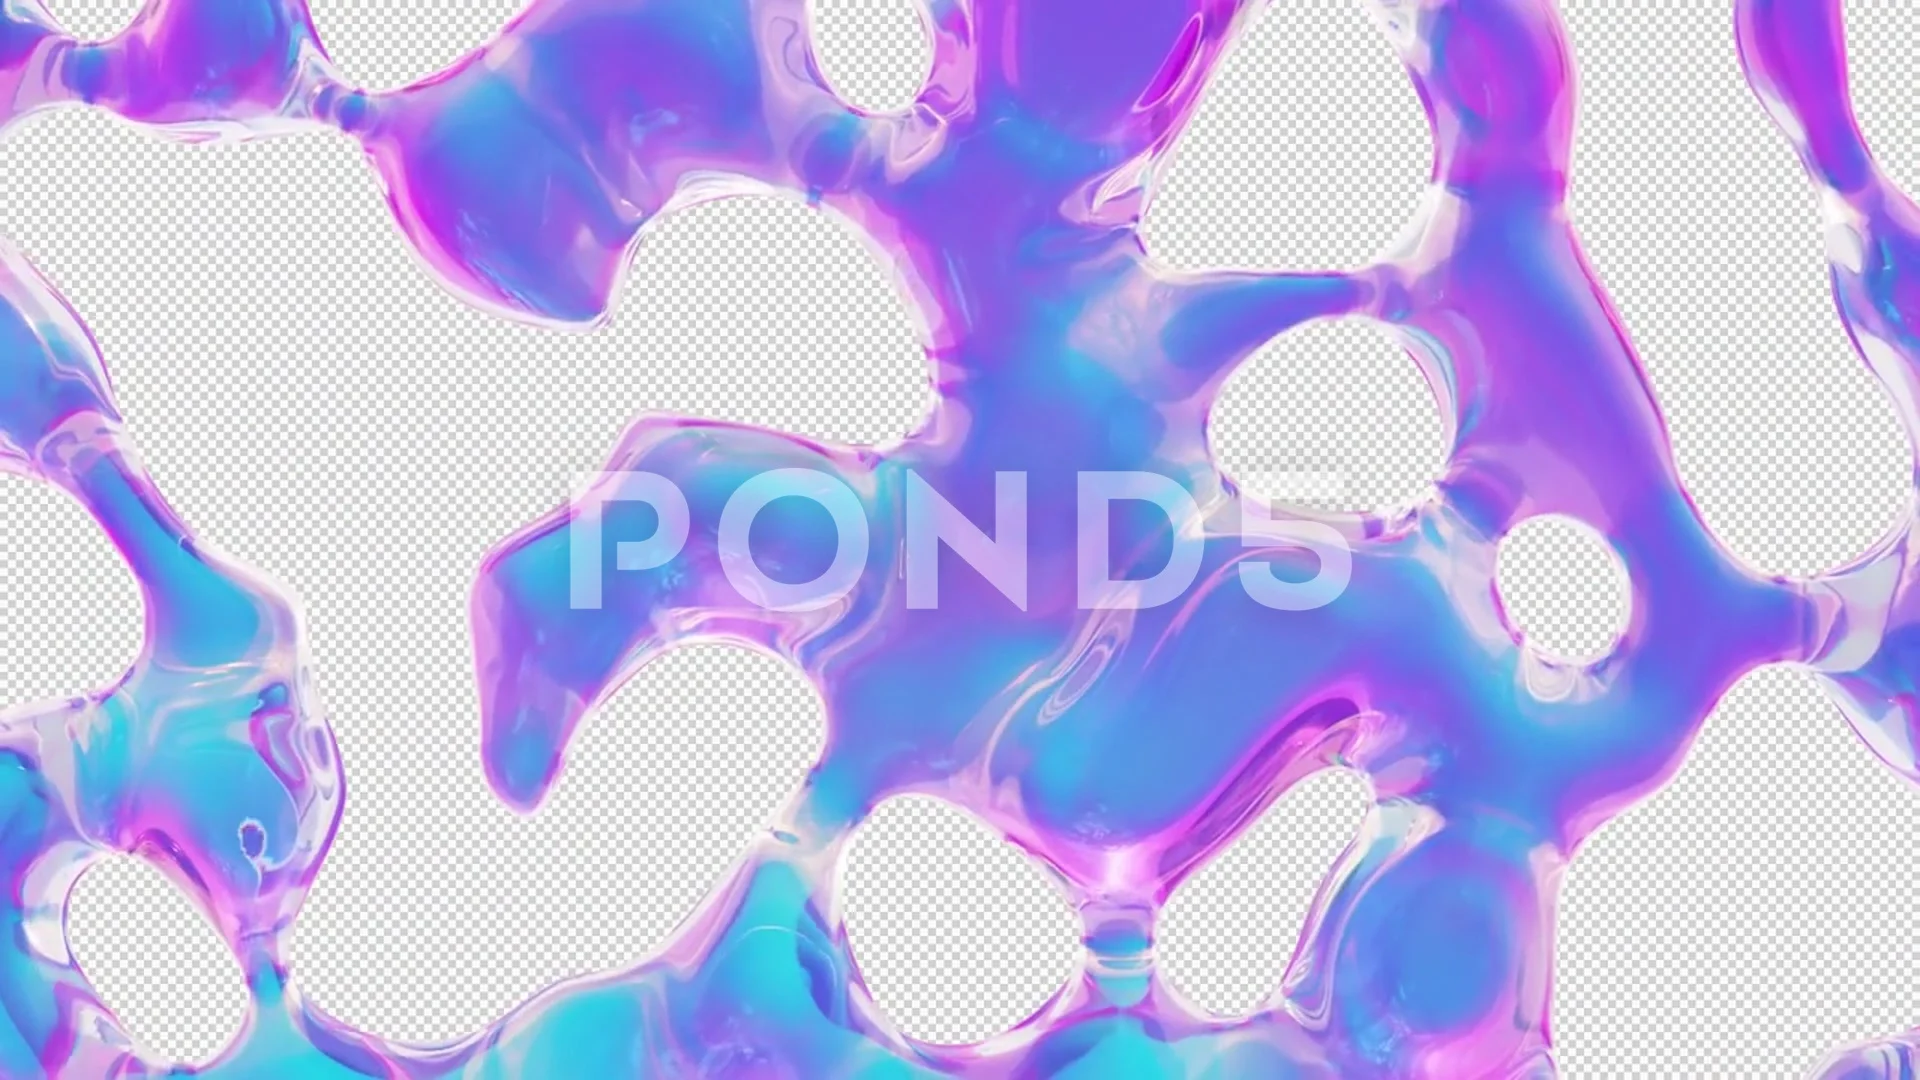 Fluid metallic drops y2k background. Dynamic iridescent retrowave